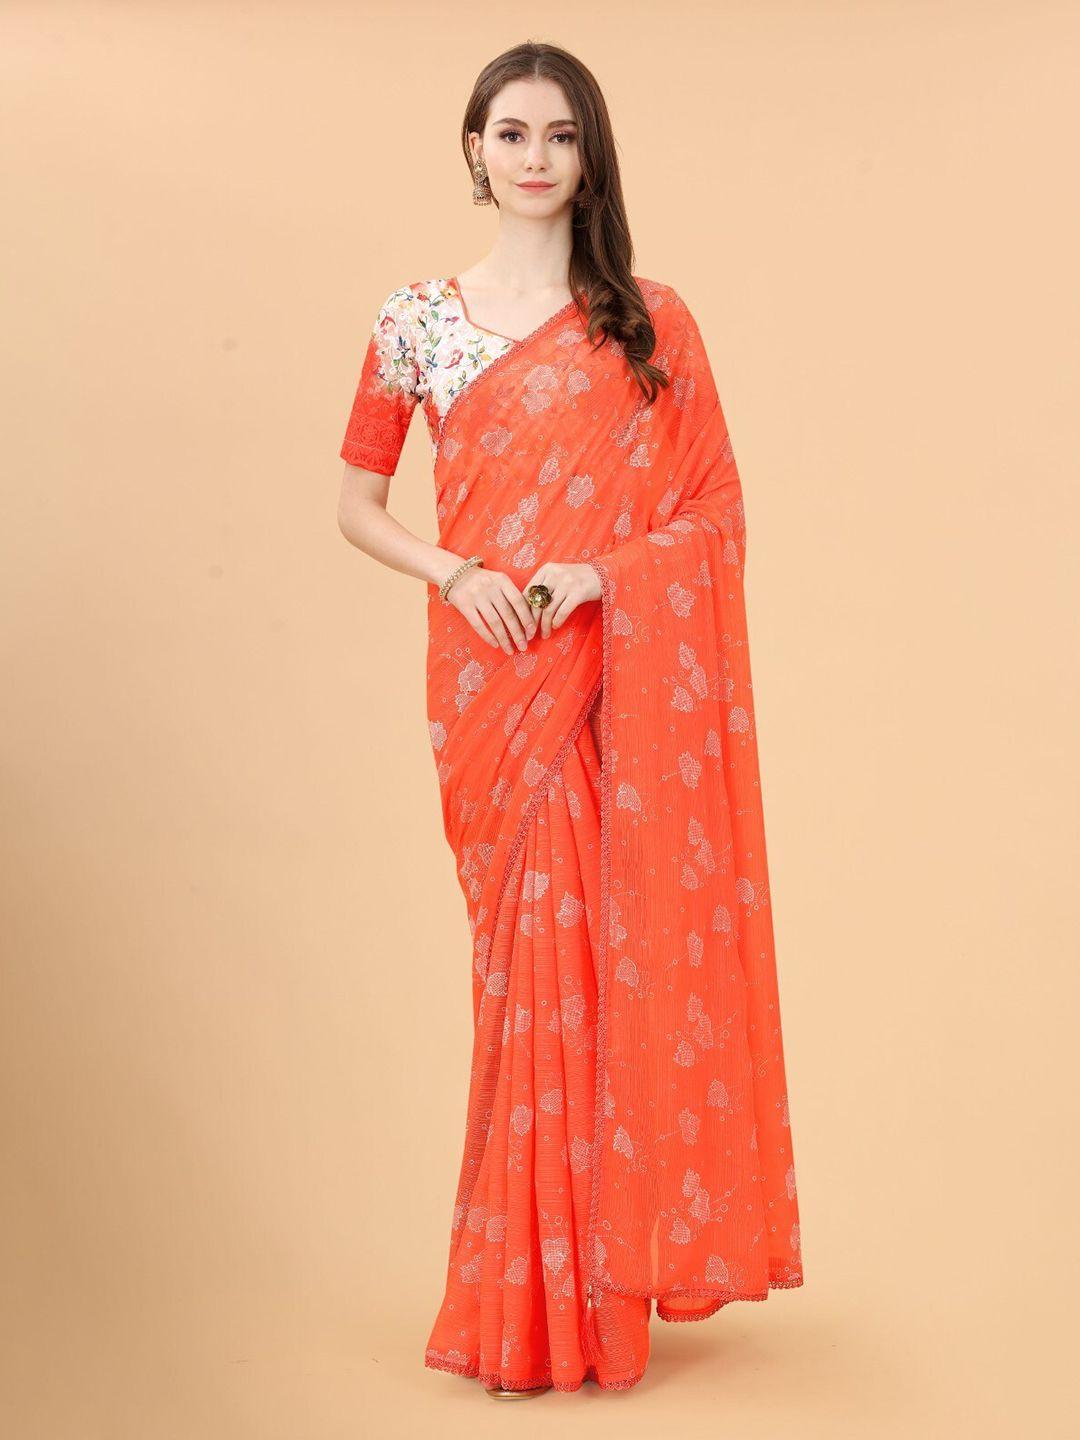 zeepkart embroidered woven design saree